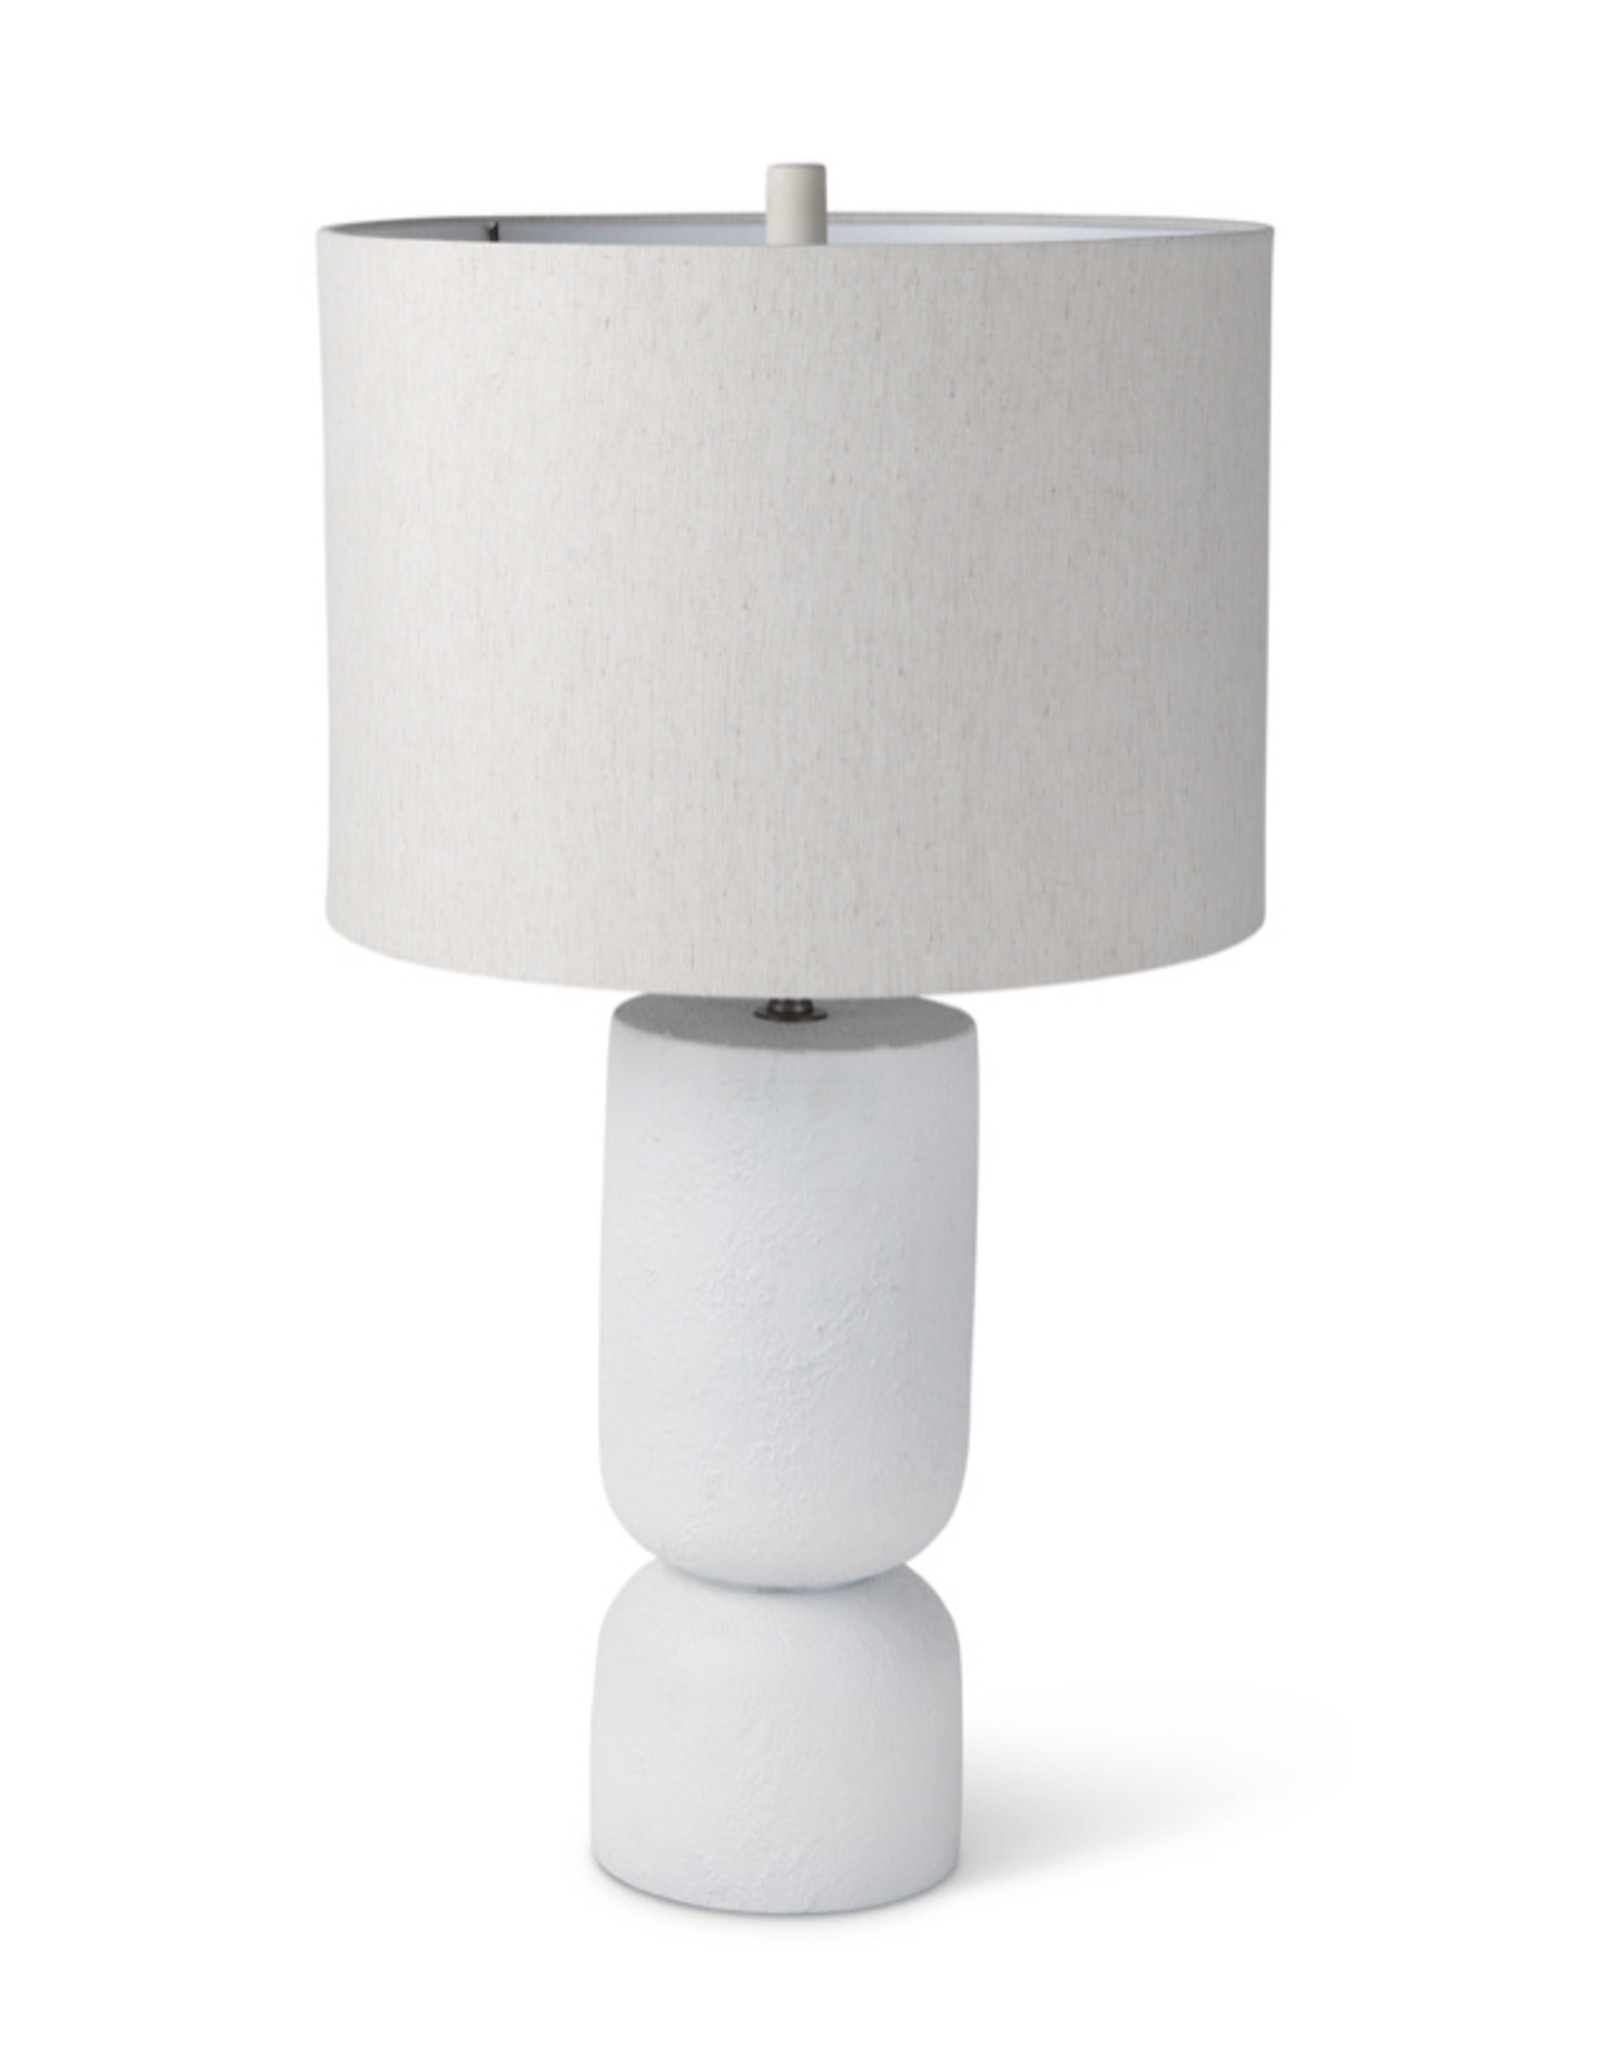 Mercana Lamp Mercana Everly Table Lamp White Cement 69707